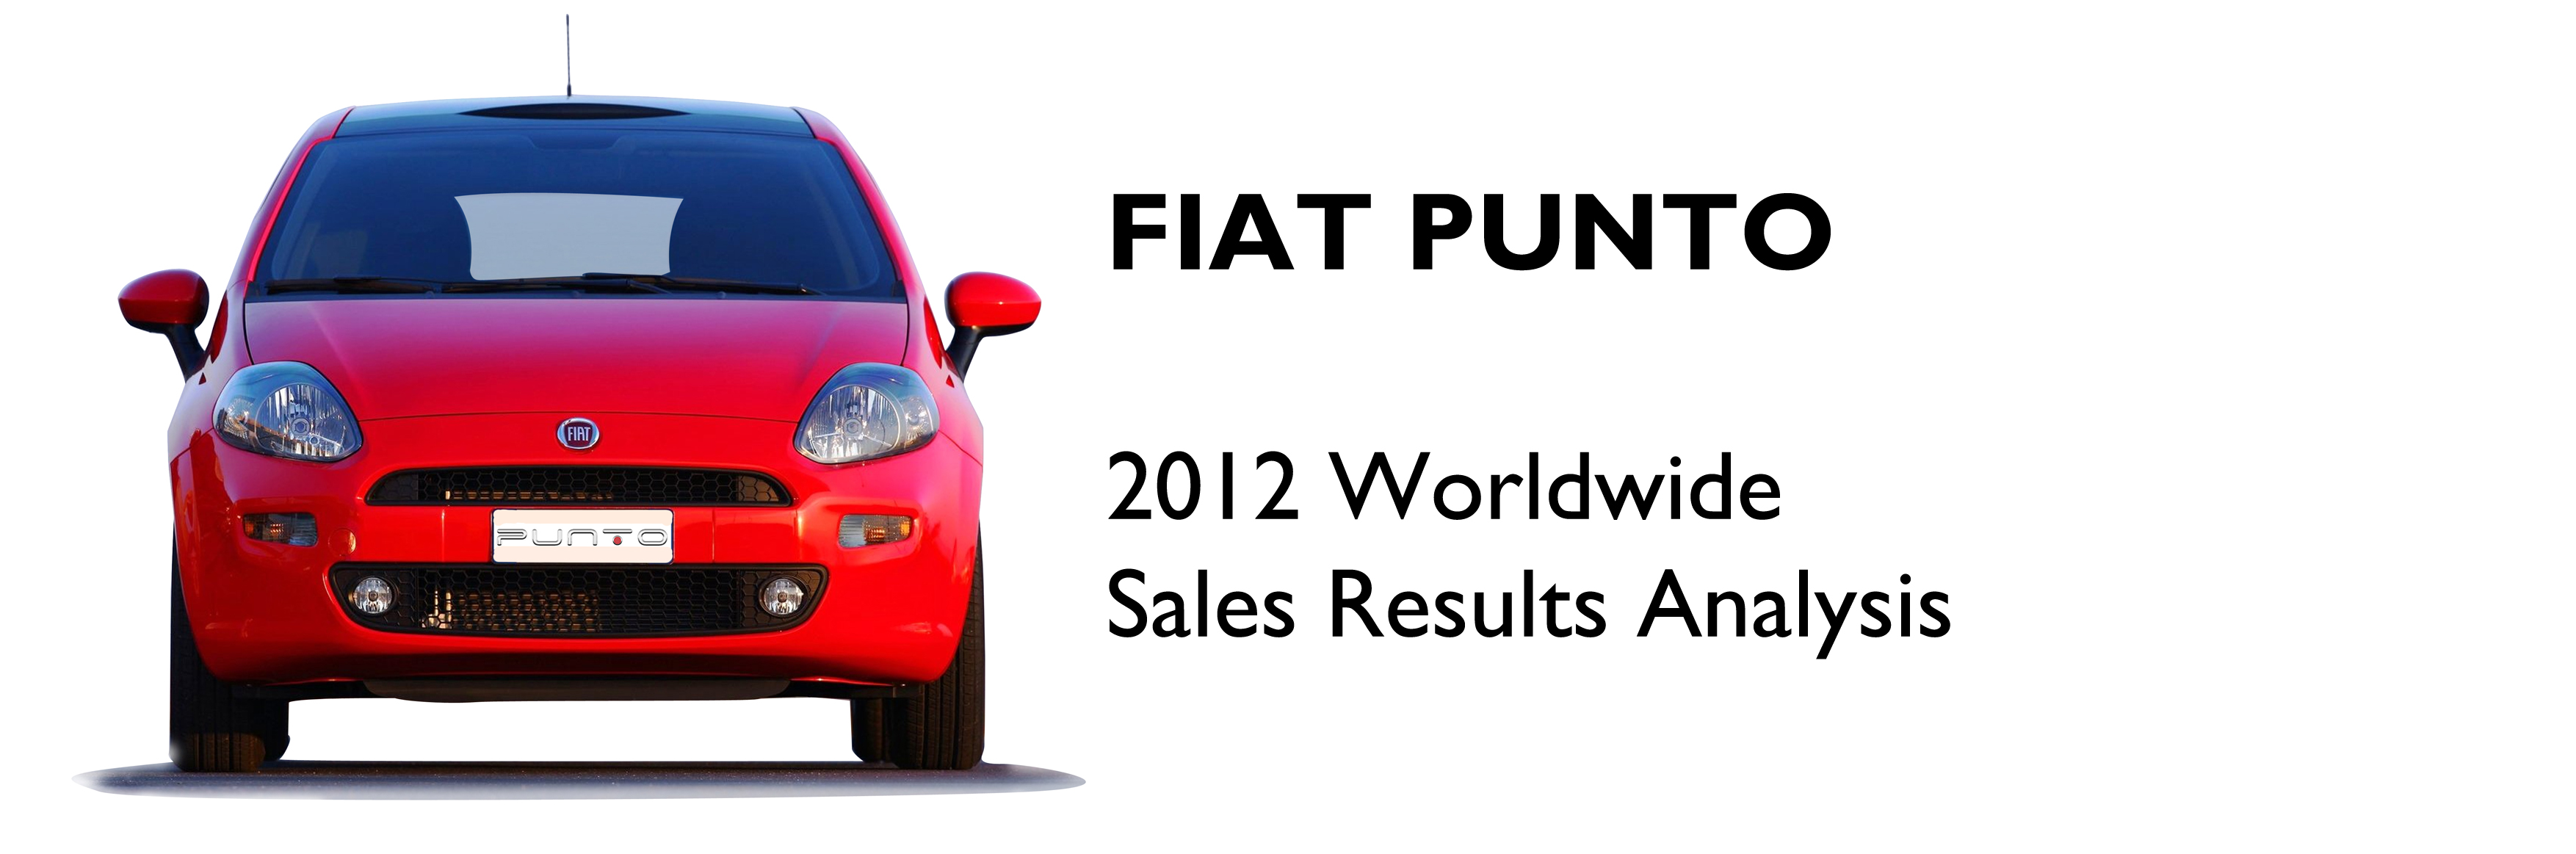 Fiat Punto Evo bows, looks good - Autoblog